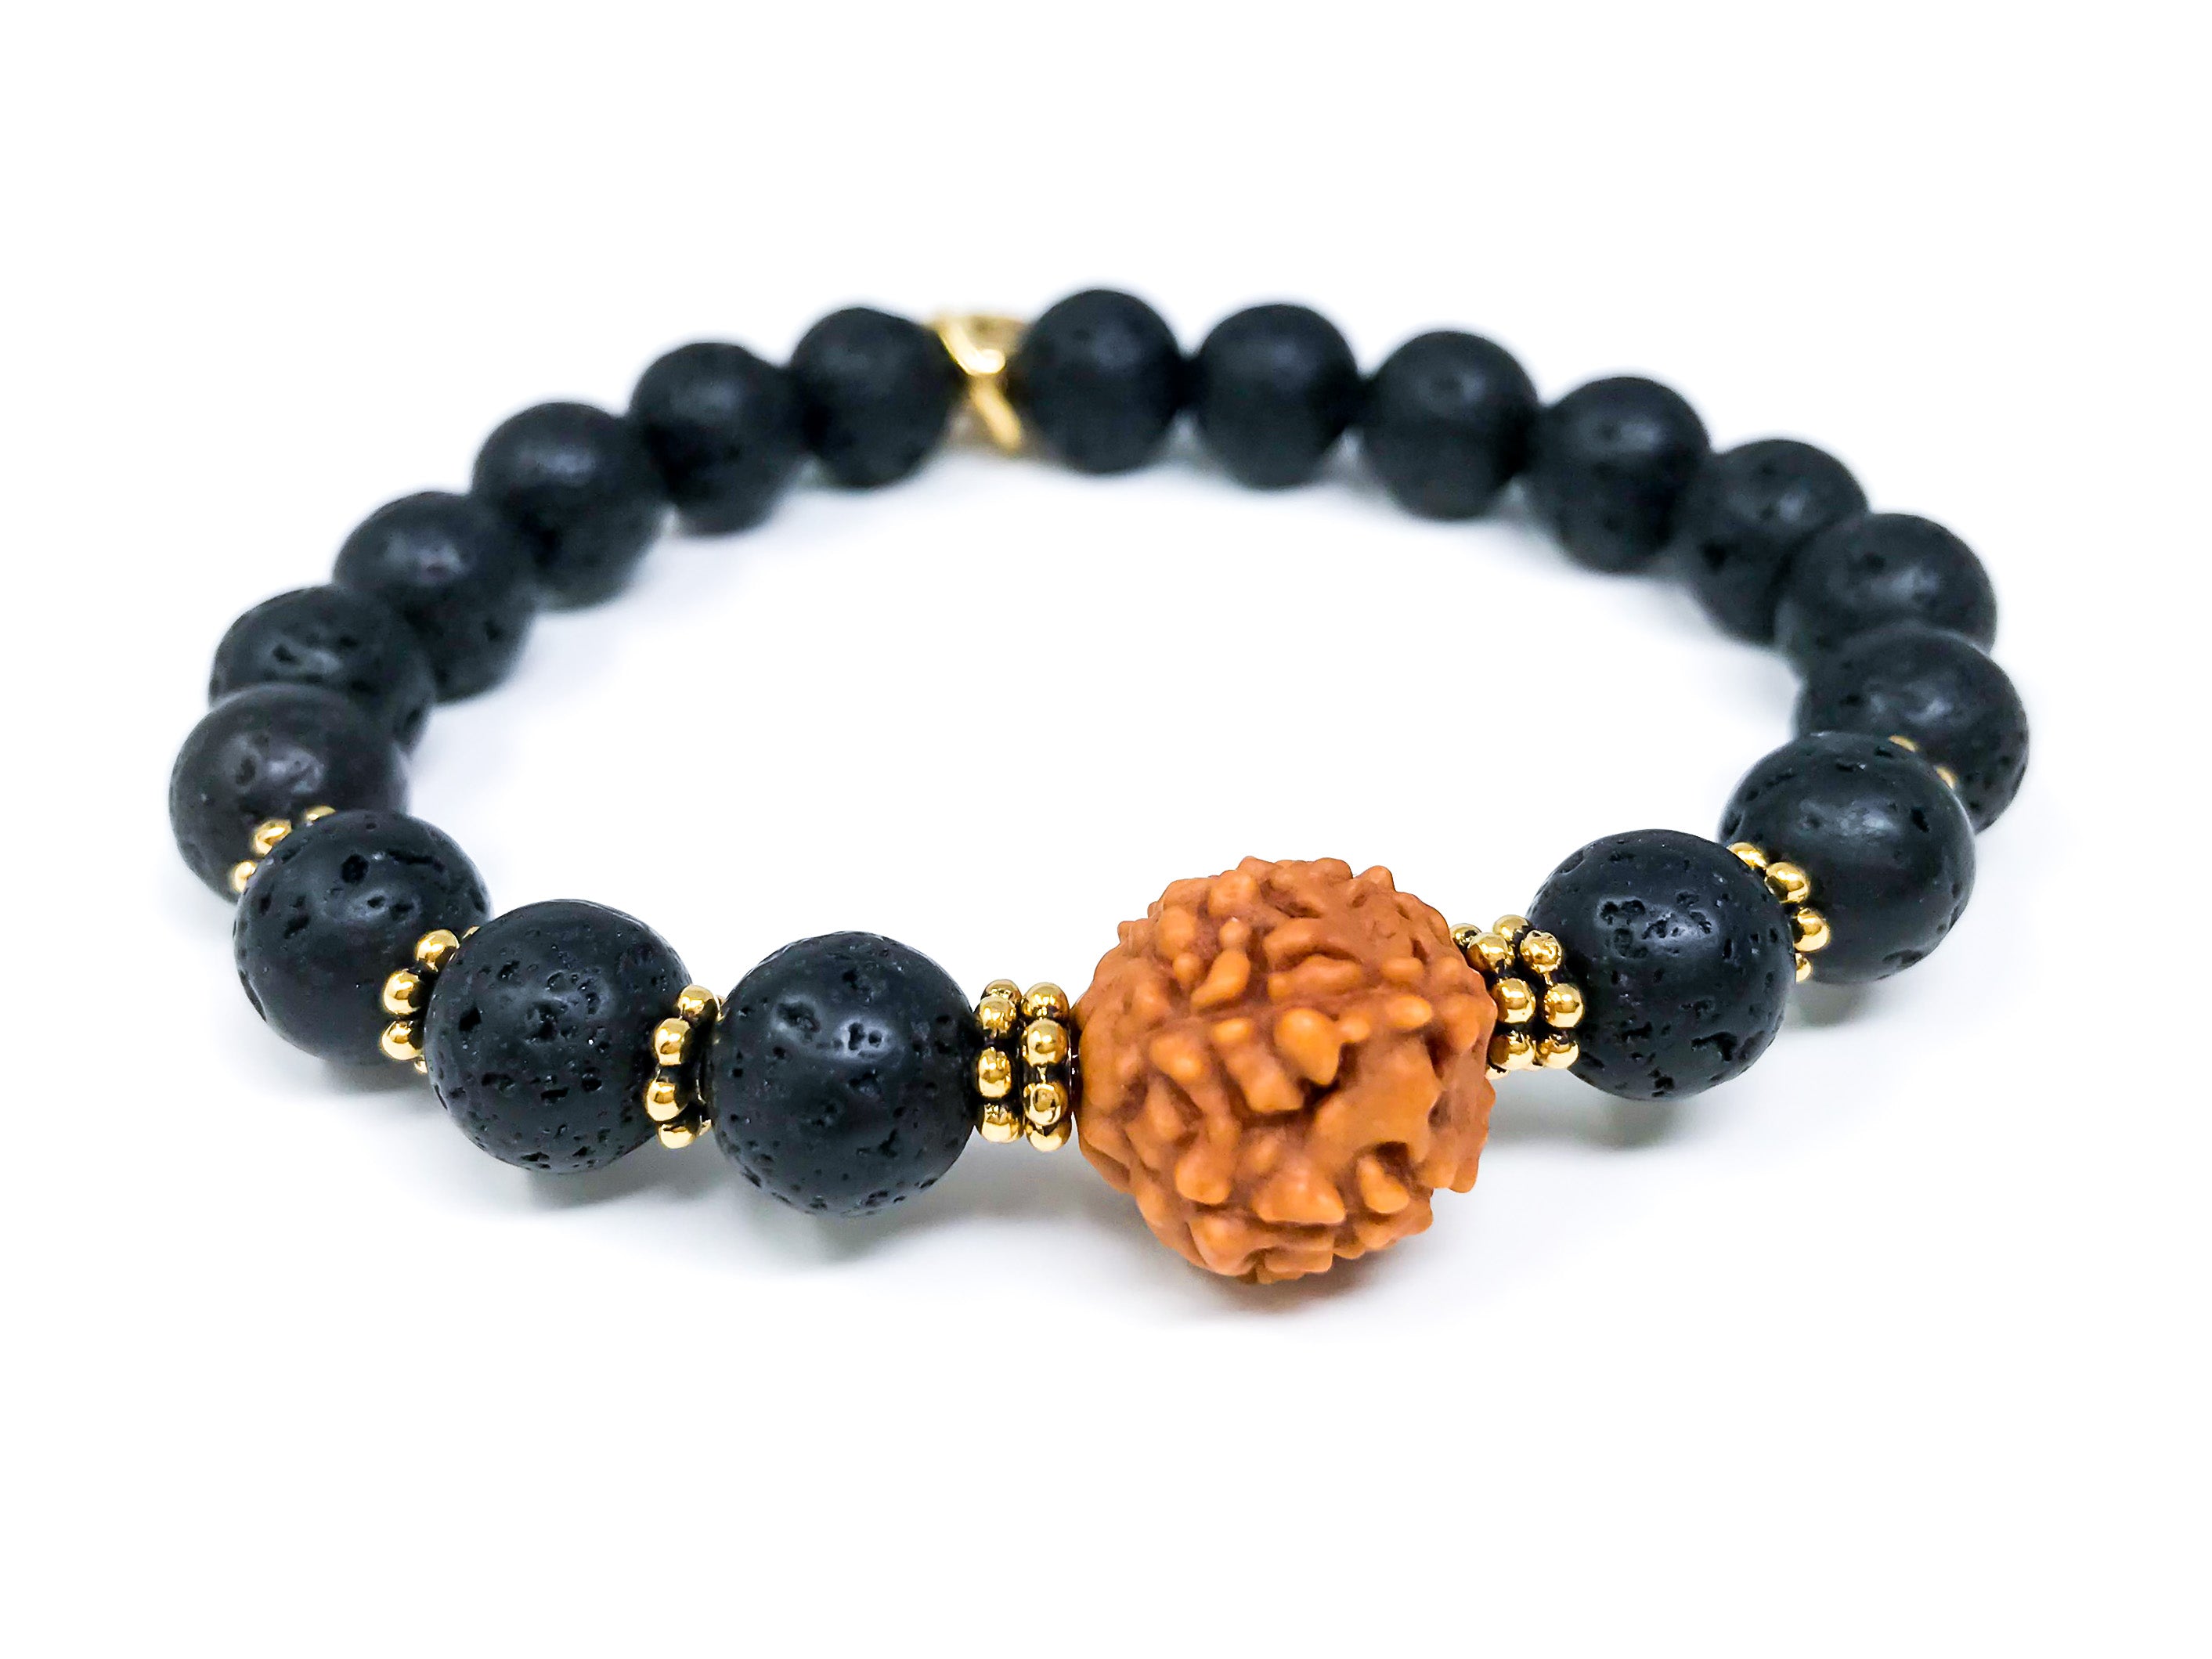 Black Lava Stone and Rudraksha Mala Bracelet, Yoga Jewelry for Protection and Calm Mind